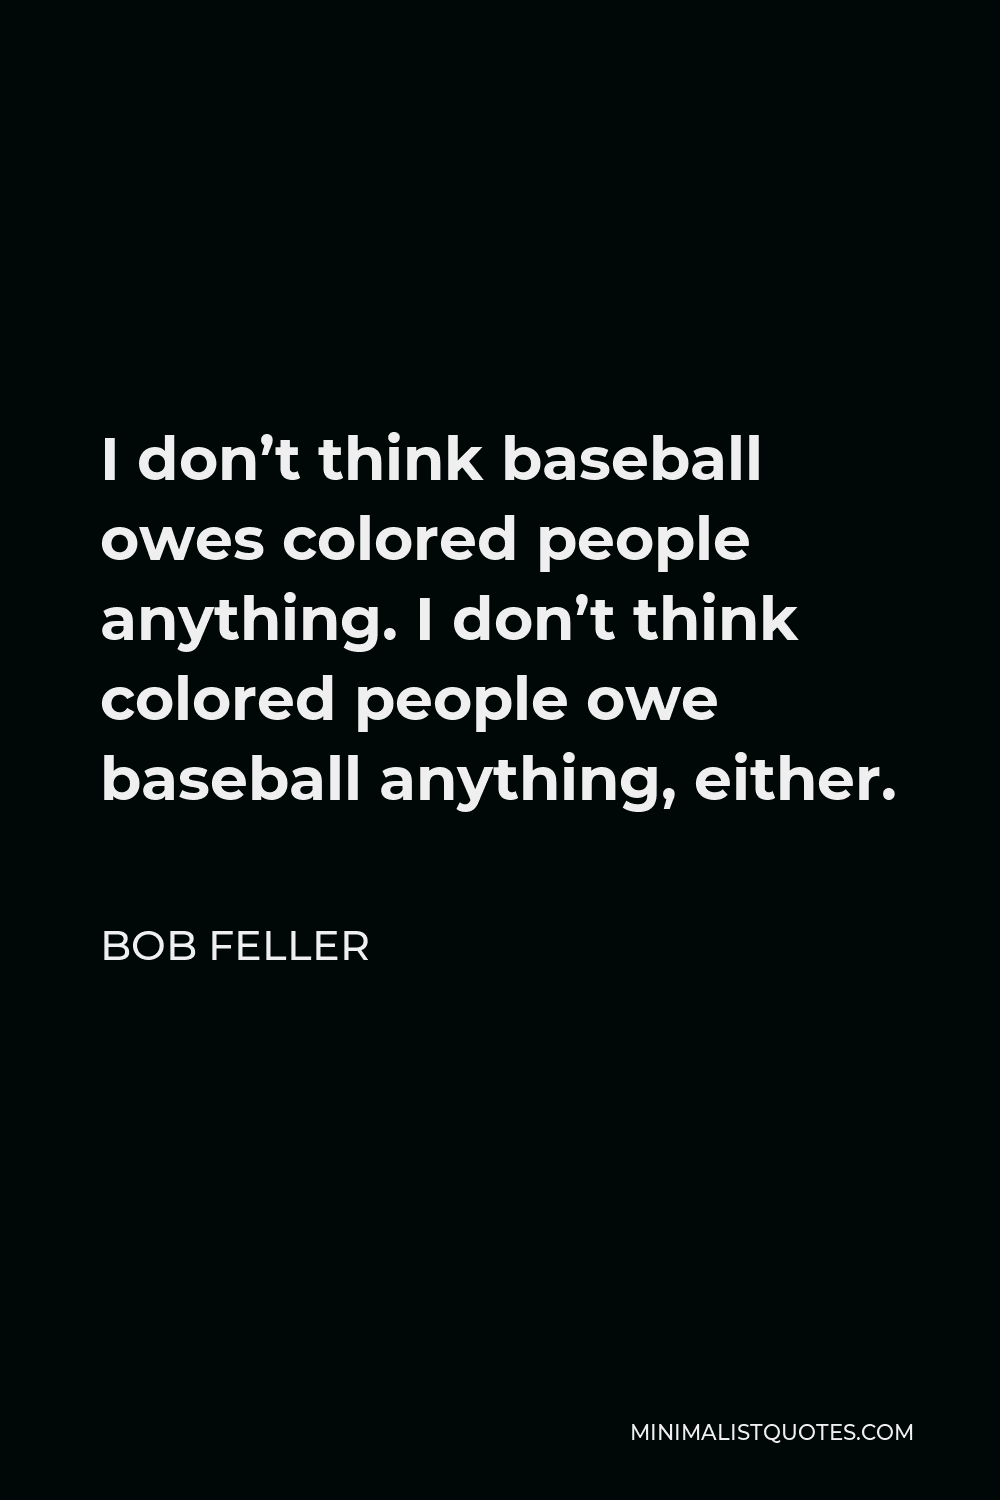 Bob Feller Quote - I don’t think baseball owes colored people anything. I don’t think colored people owe baseball anything, either.